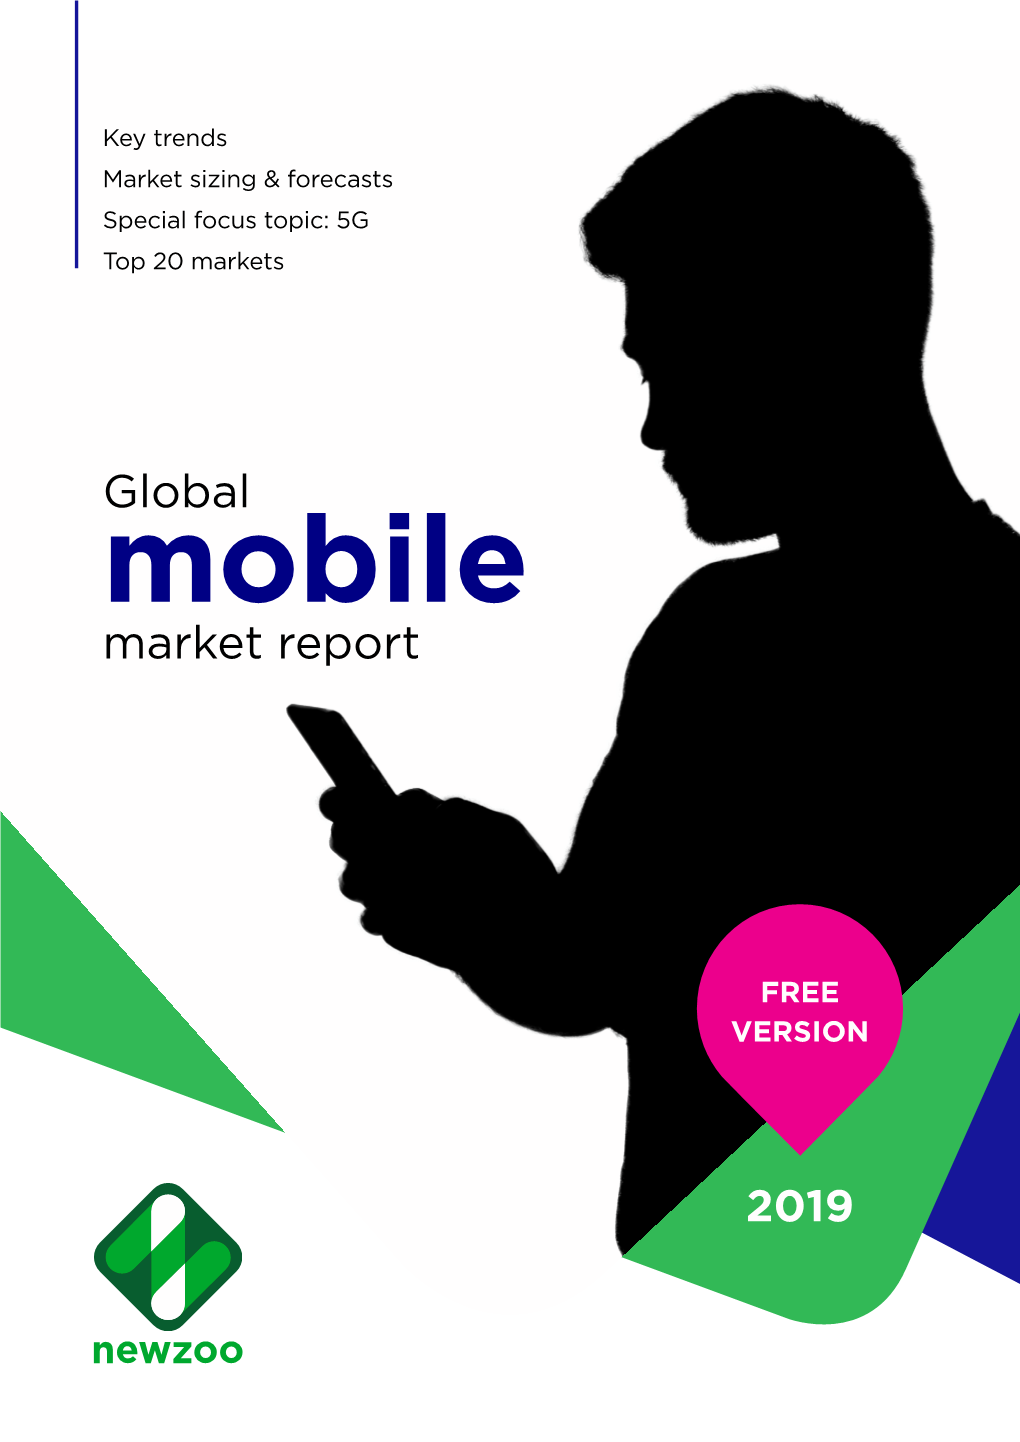 Global Market Report